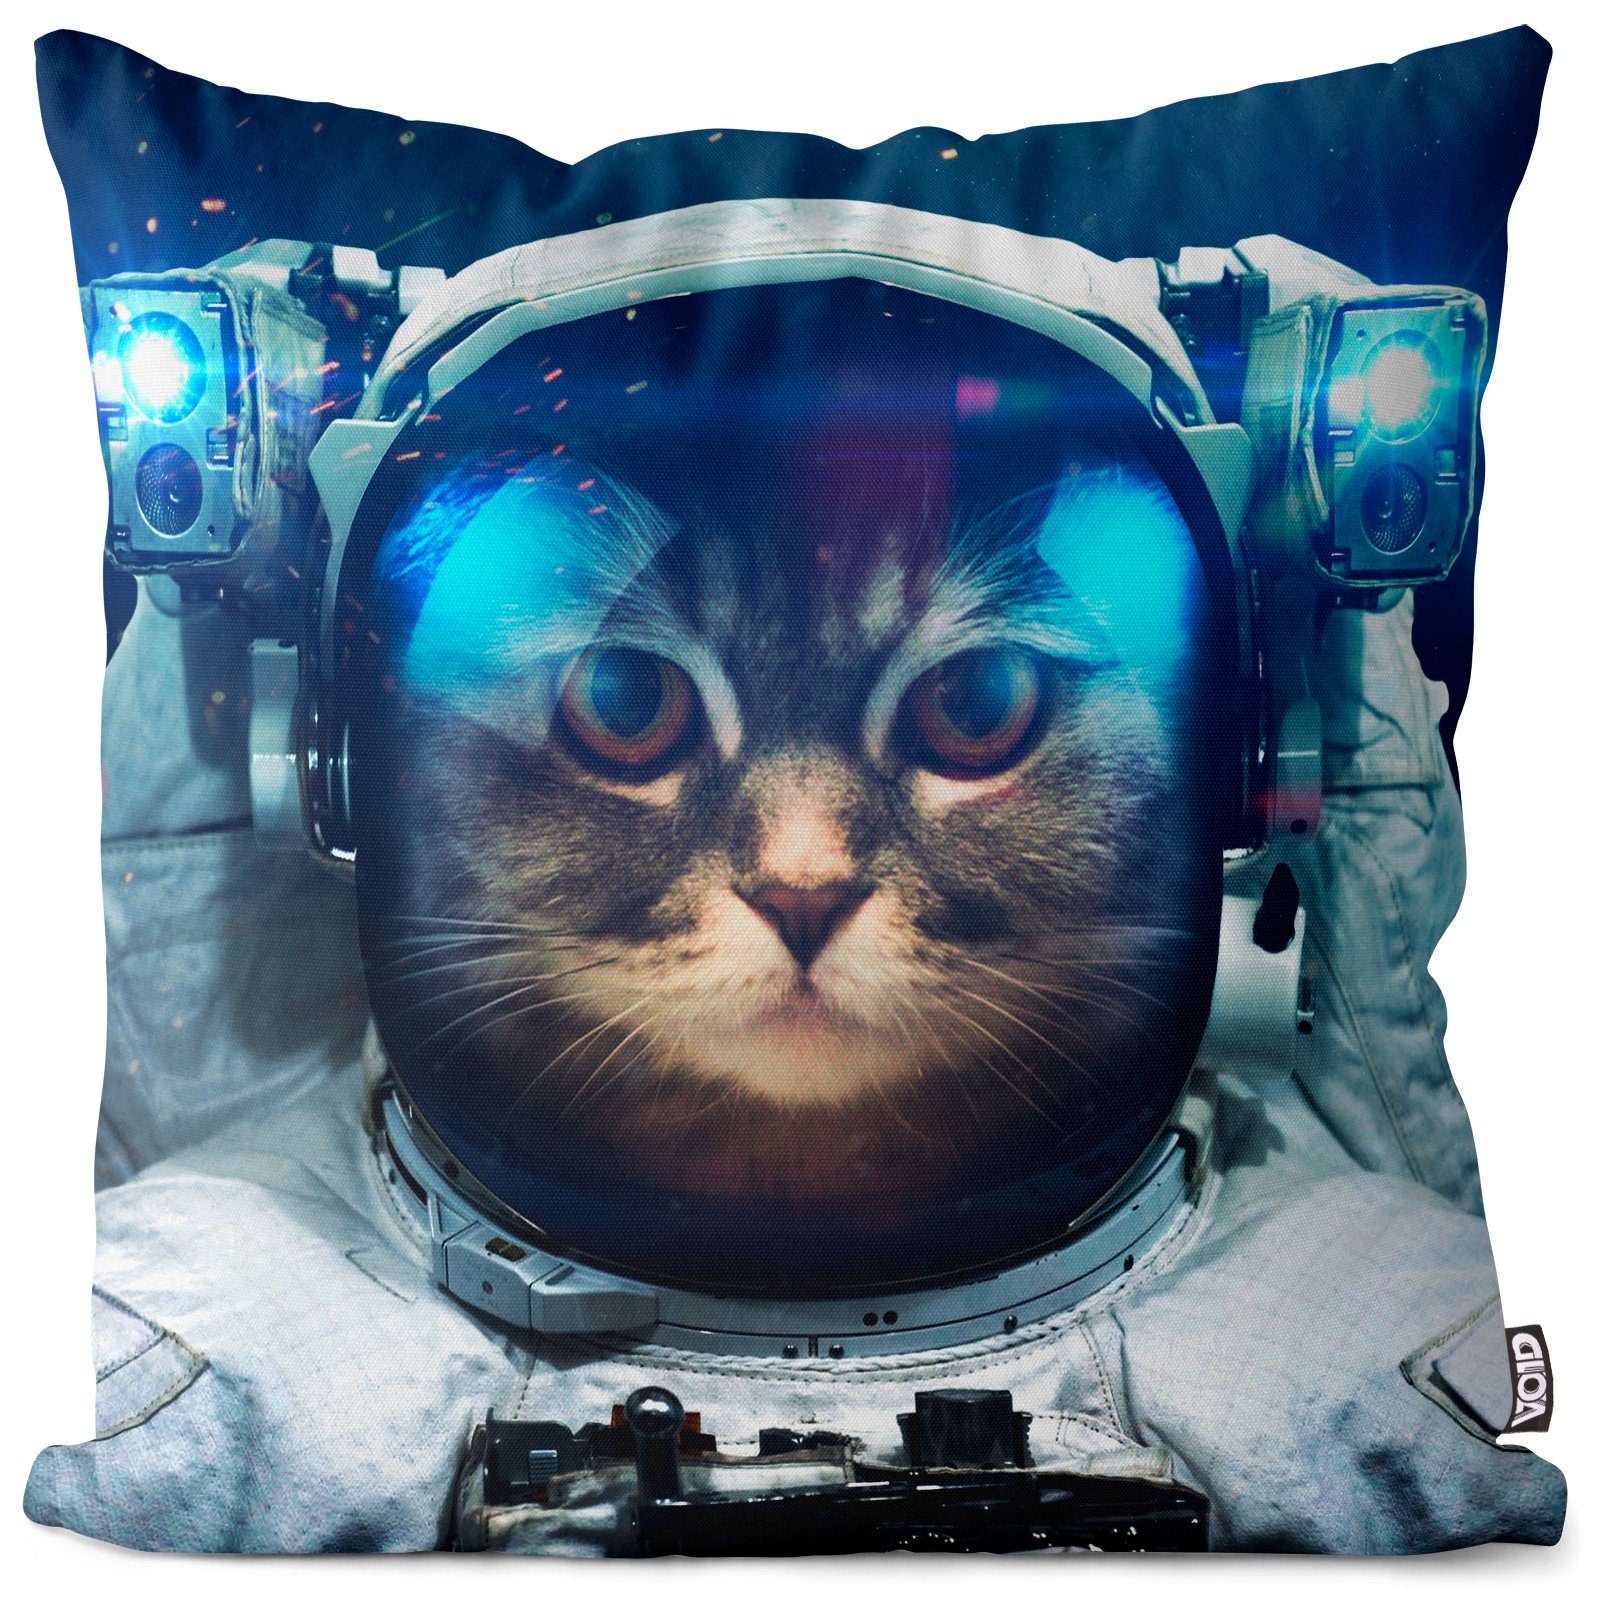 Astronaut Katze Astronaut Raumschiff (1 VOID Raumfahrt Kissenbezug, Stück), Sofa-Kissen Weltall Kissenbezug Space Katze